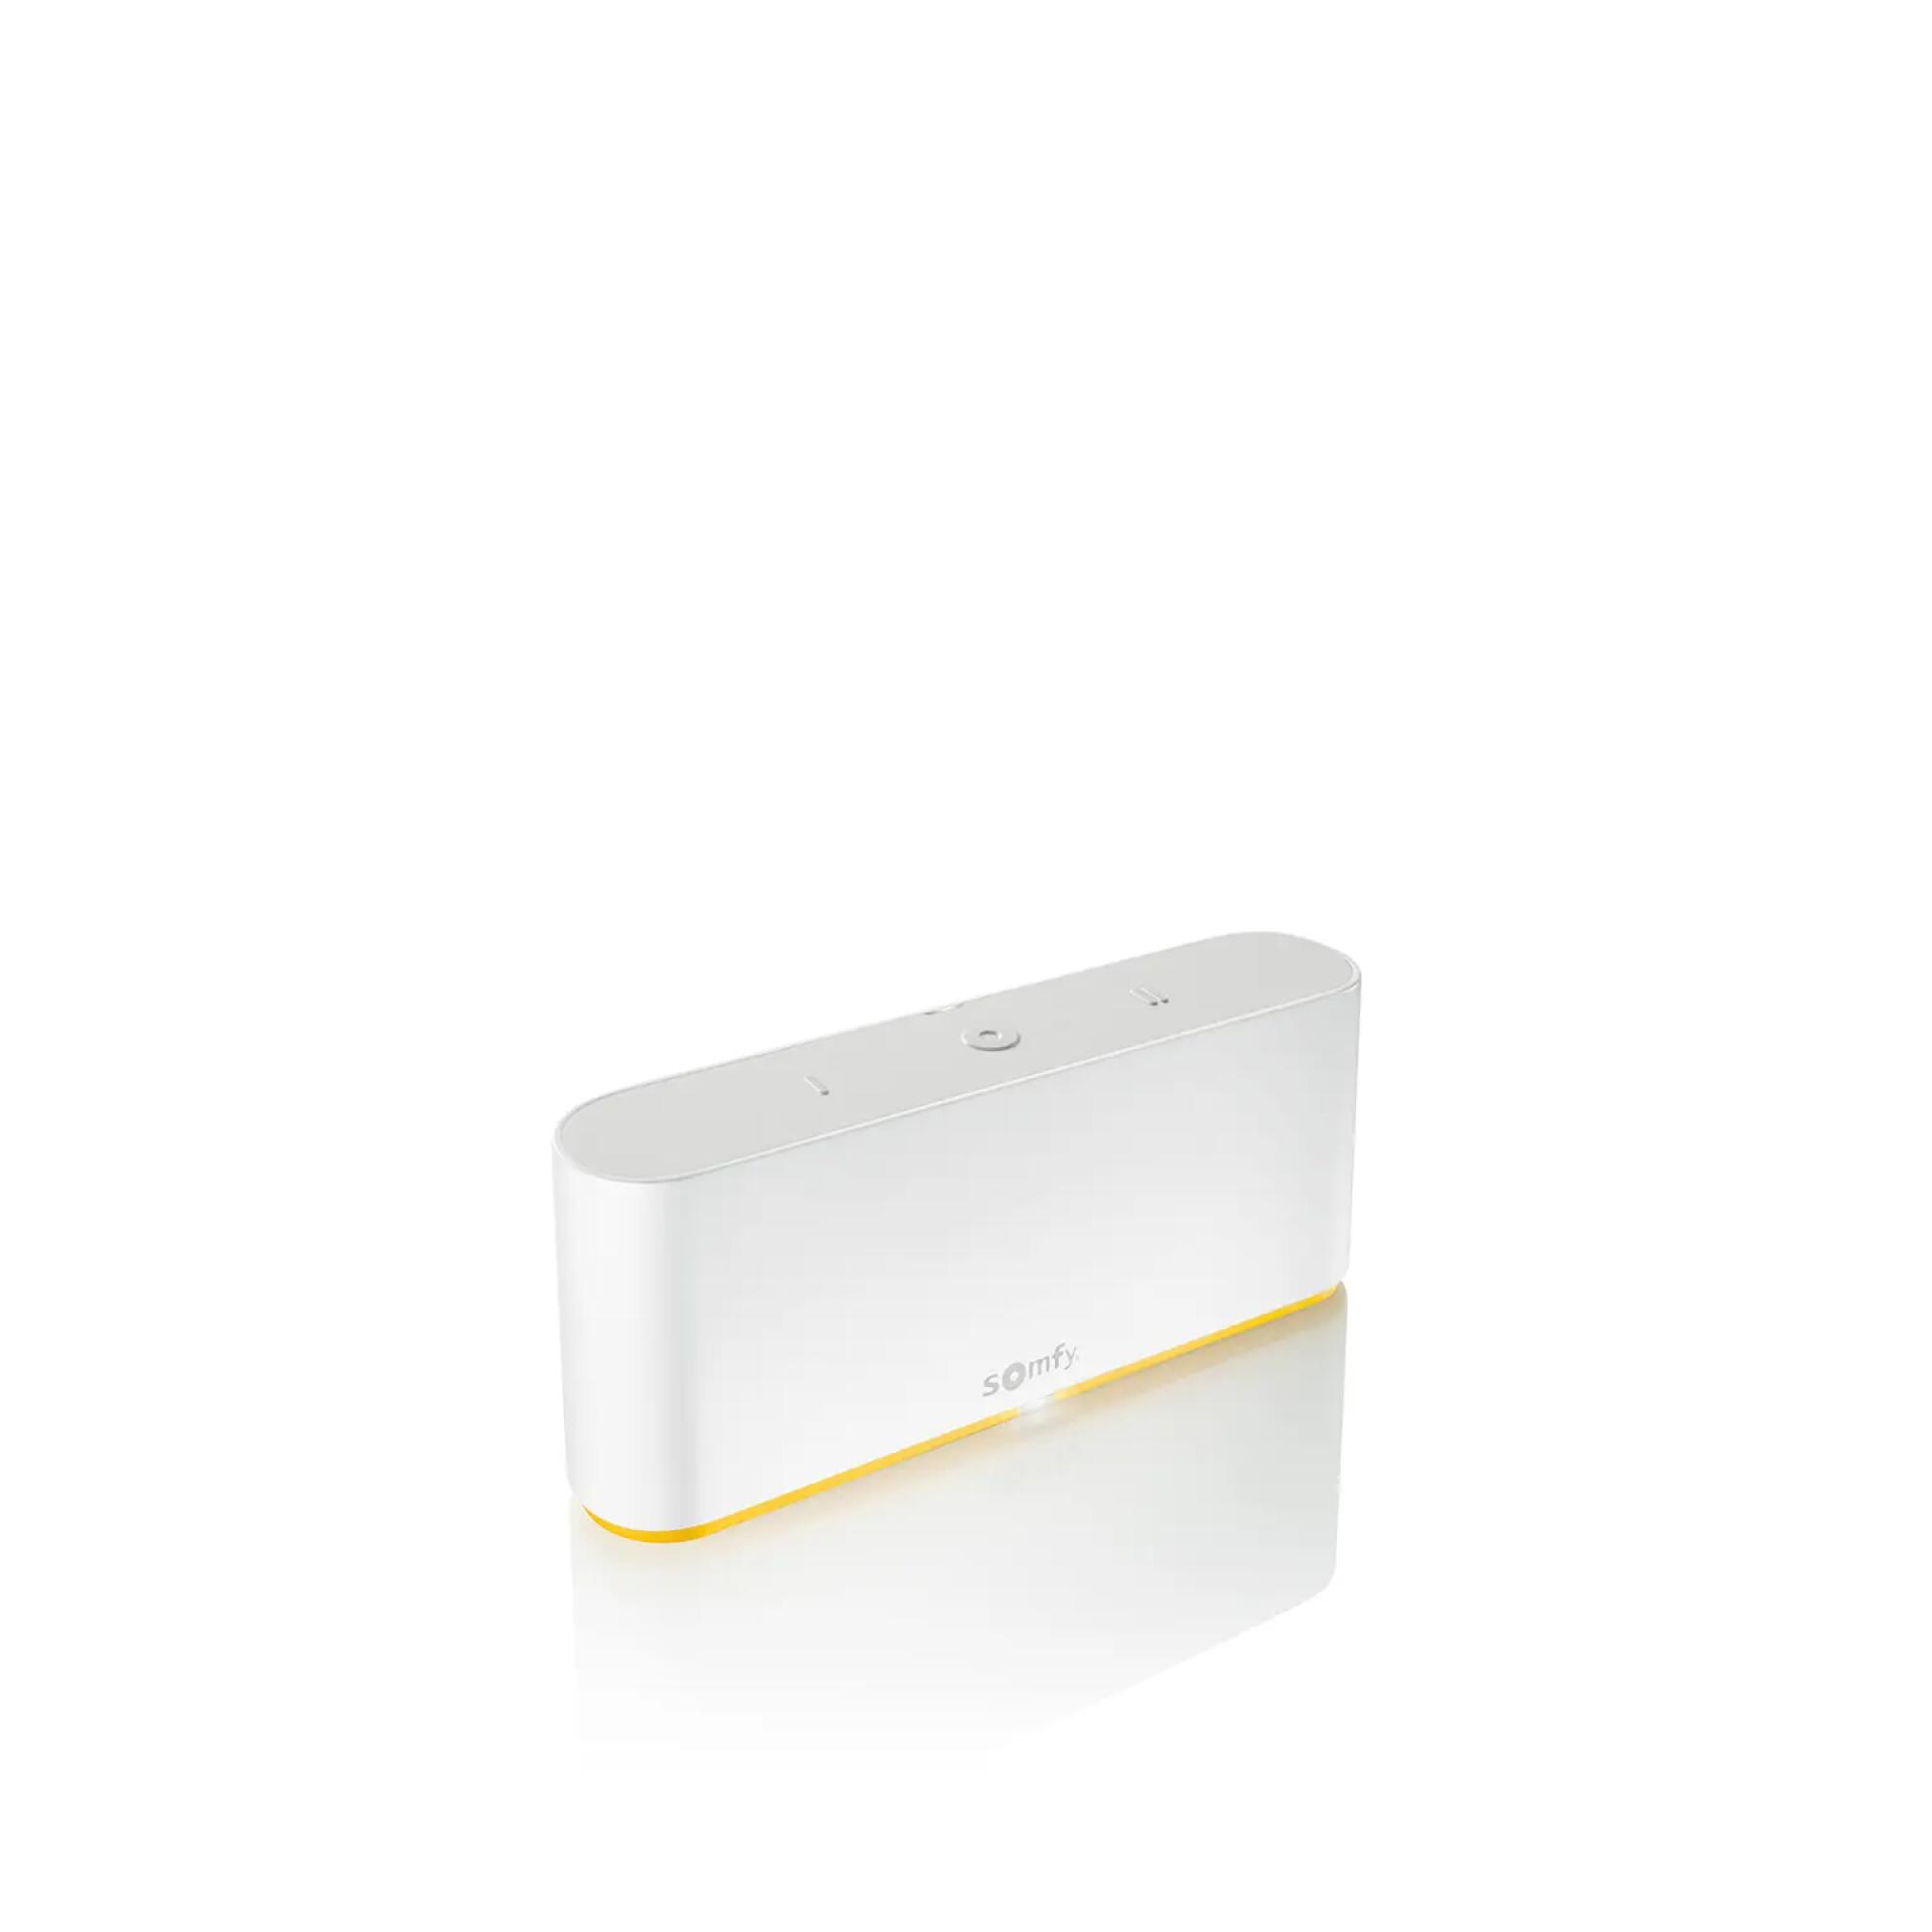 Somfy Thermostat Wifi - Radio Sans Fil Connectée - Prix